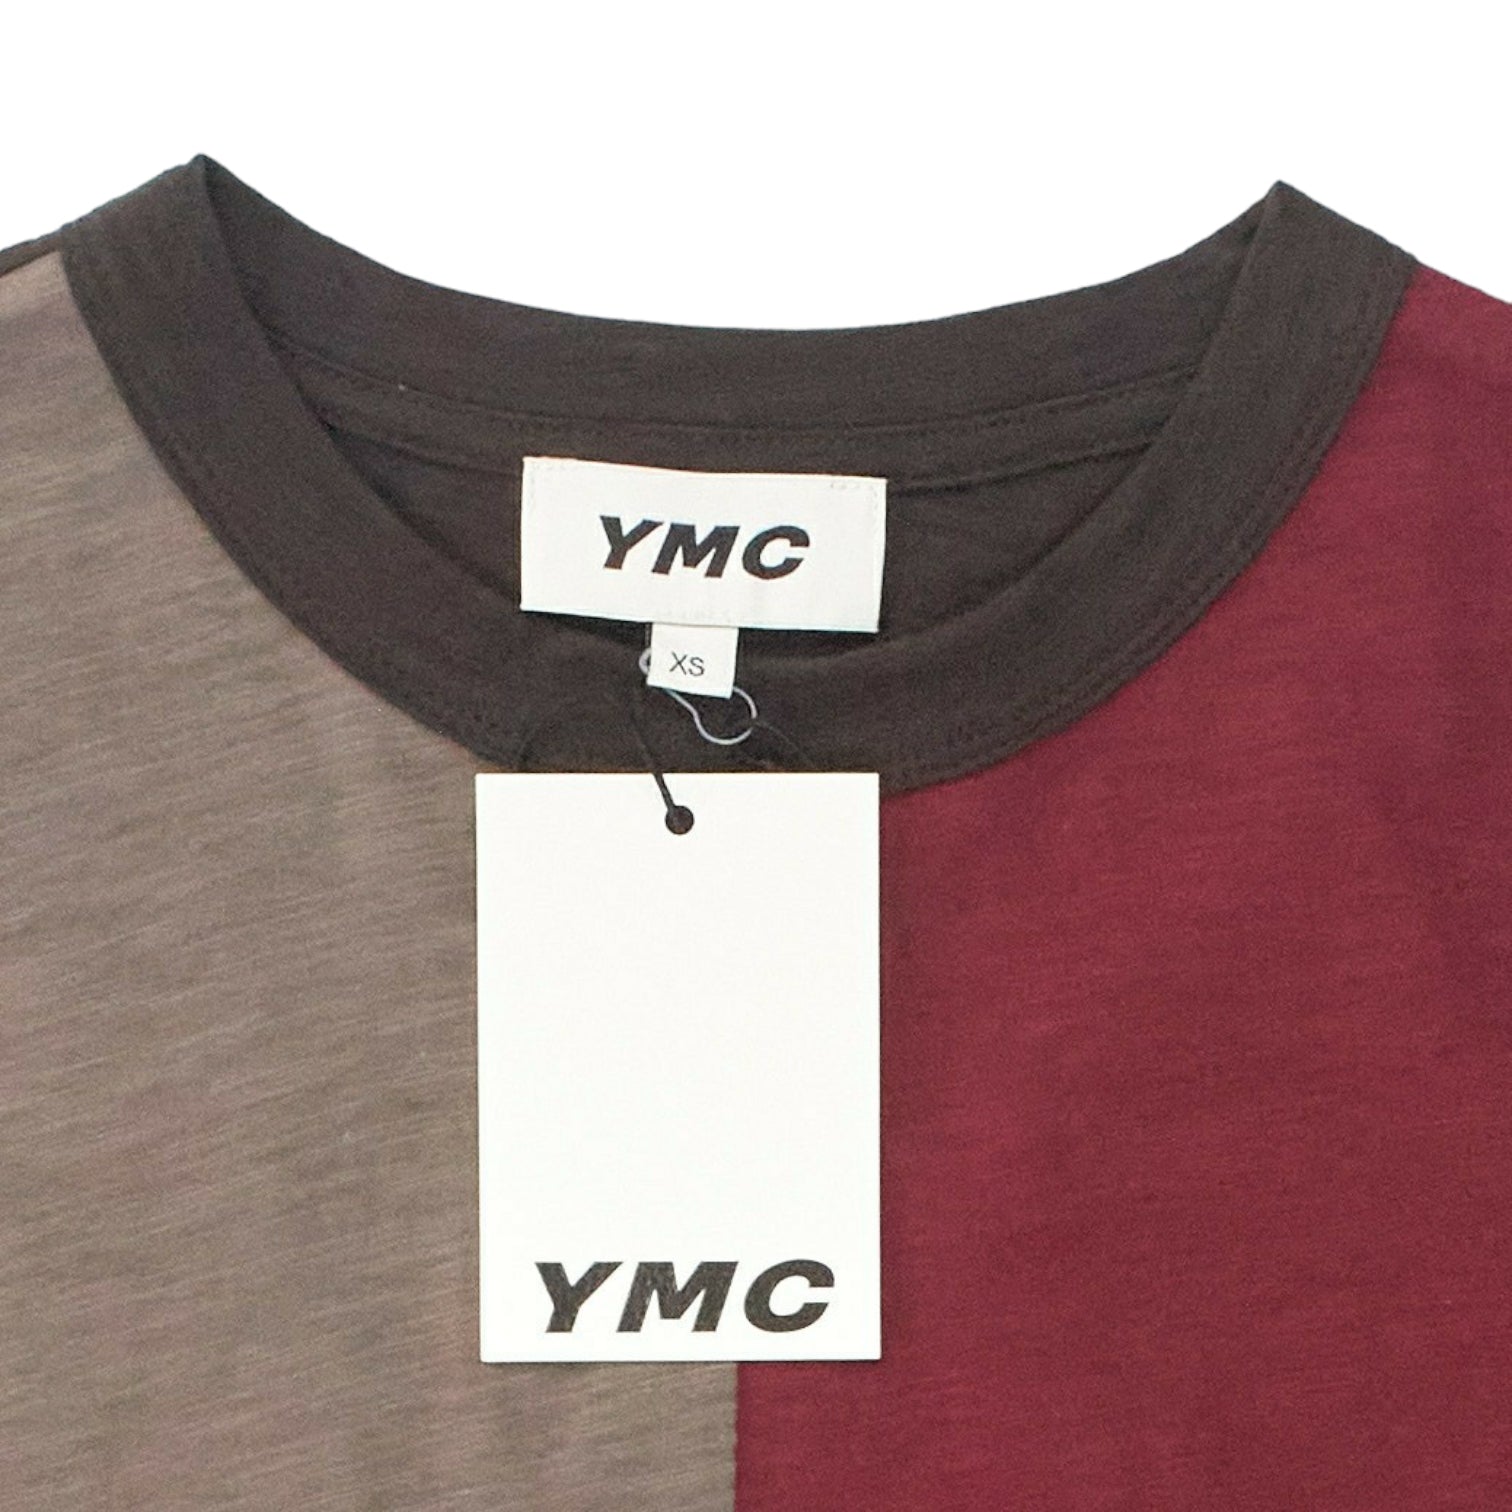 YMC Brown/Red Block T Shirt